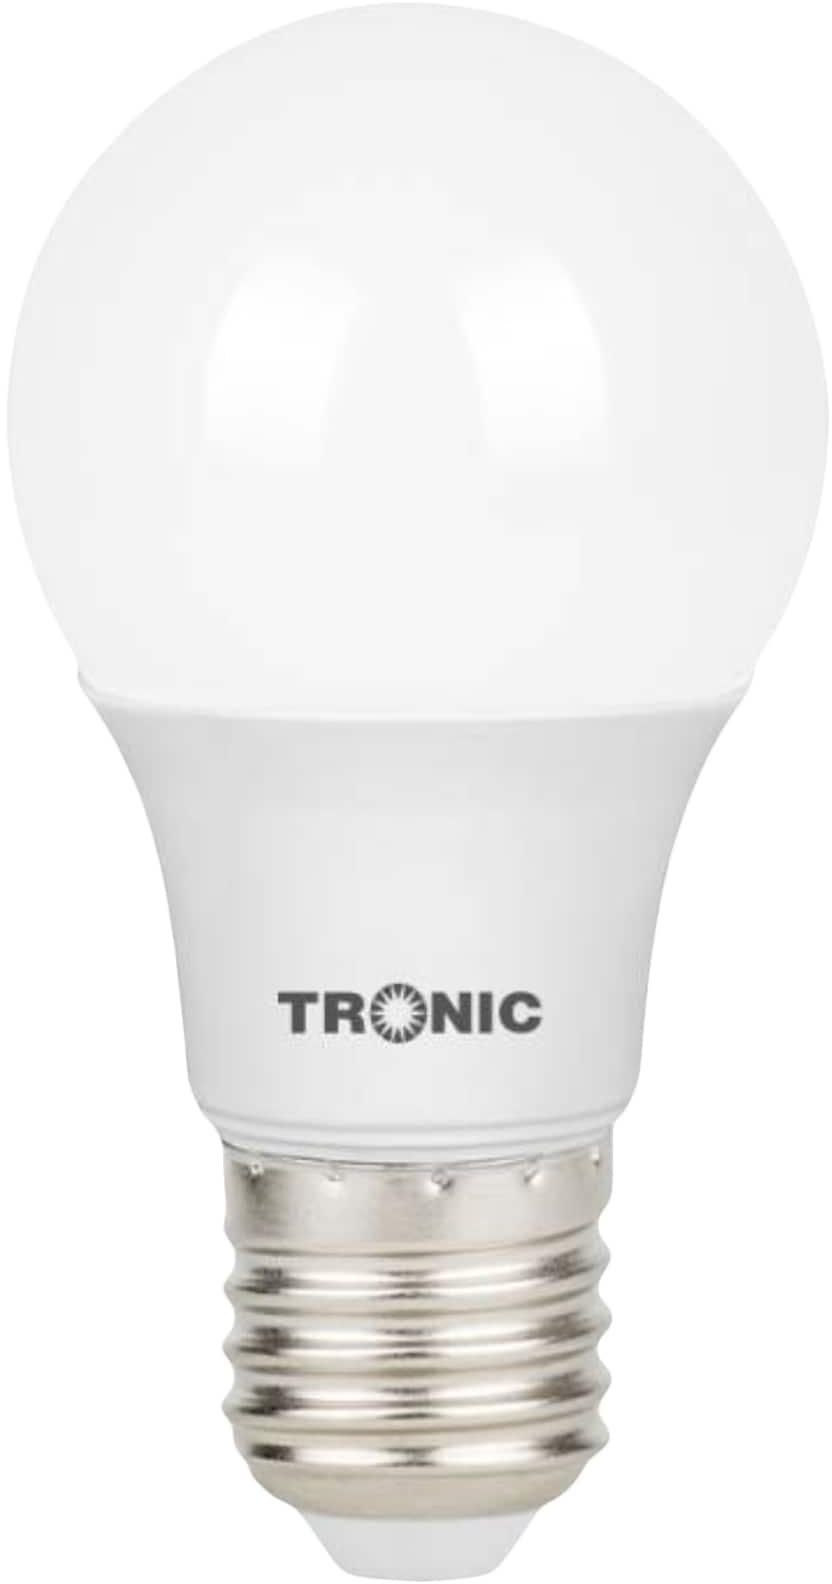 Tronic E27 LED Bulb 12W 1 Piece